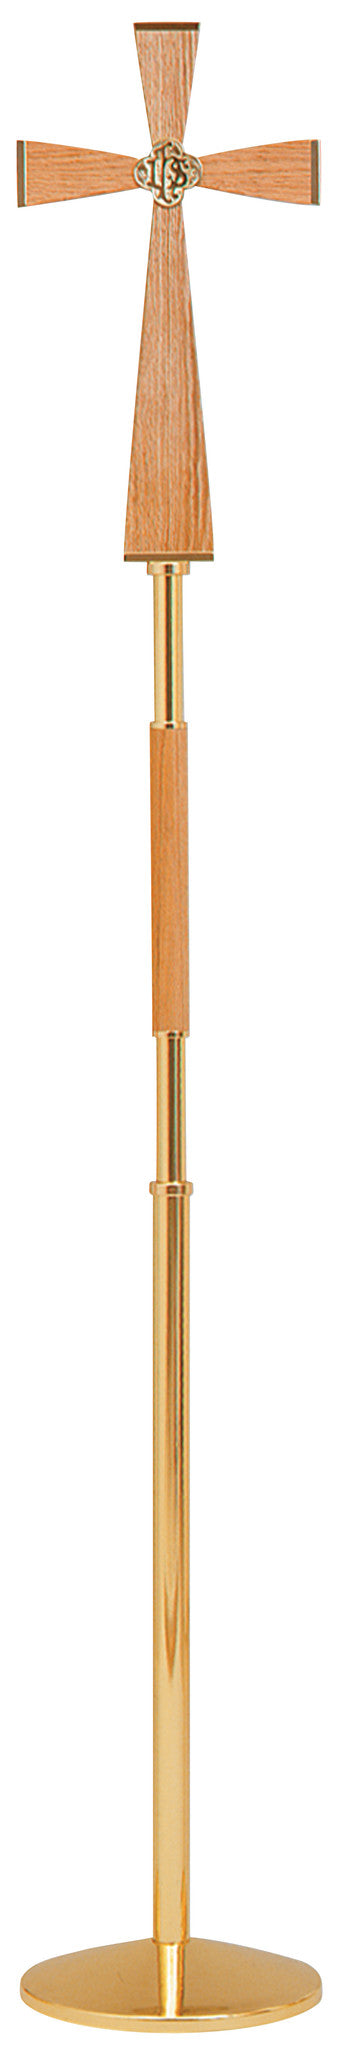 Processional Cross - Solid Brass with Oak - K490 - Koleys - Chiarelli's Religious Goods & Church Supply